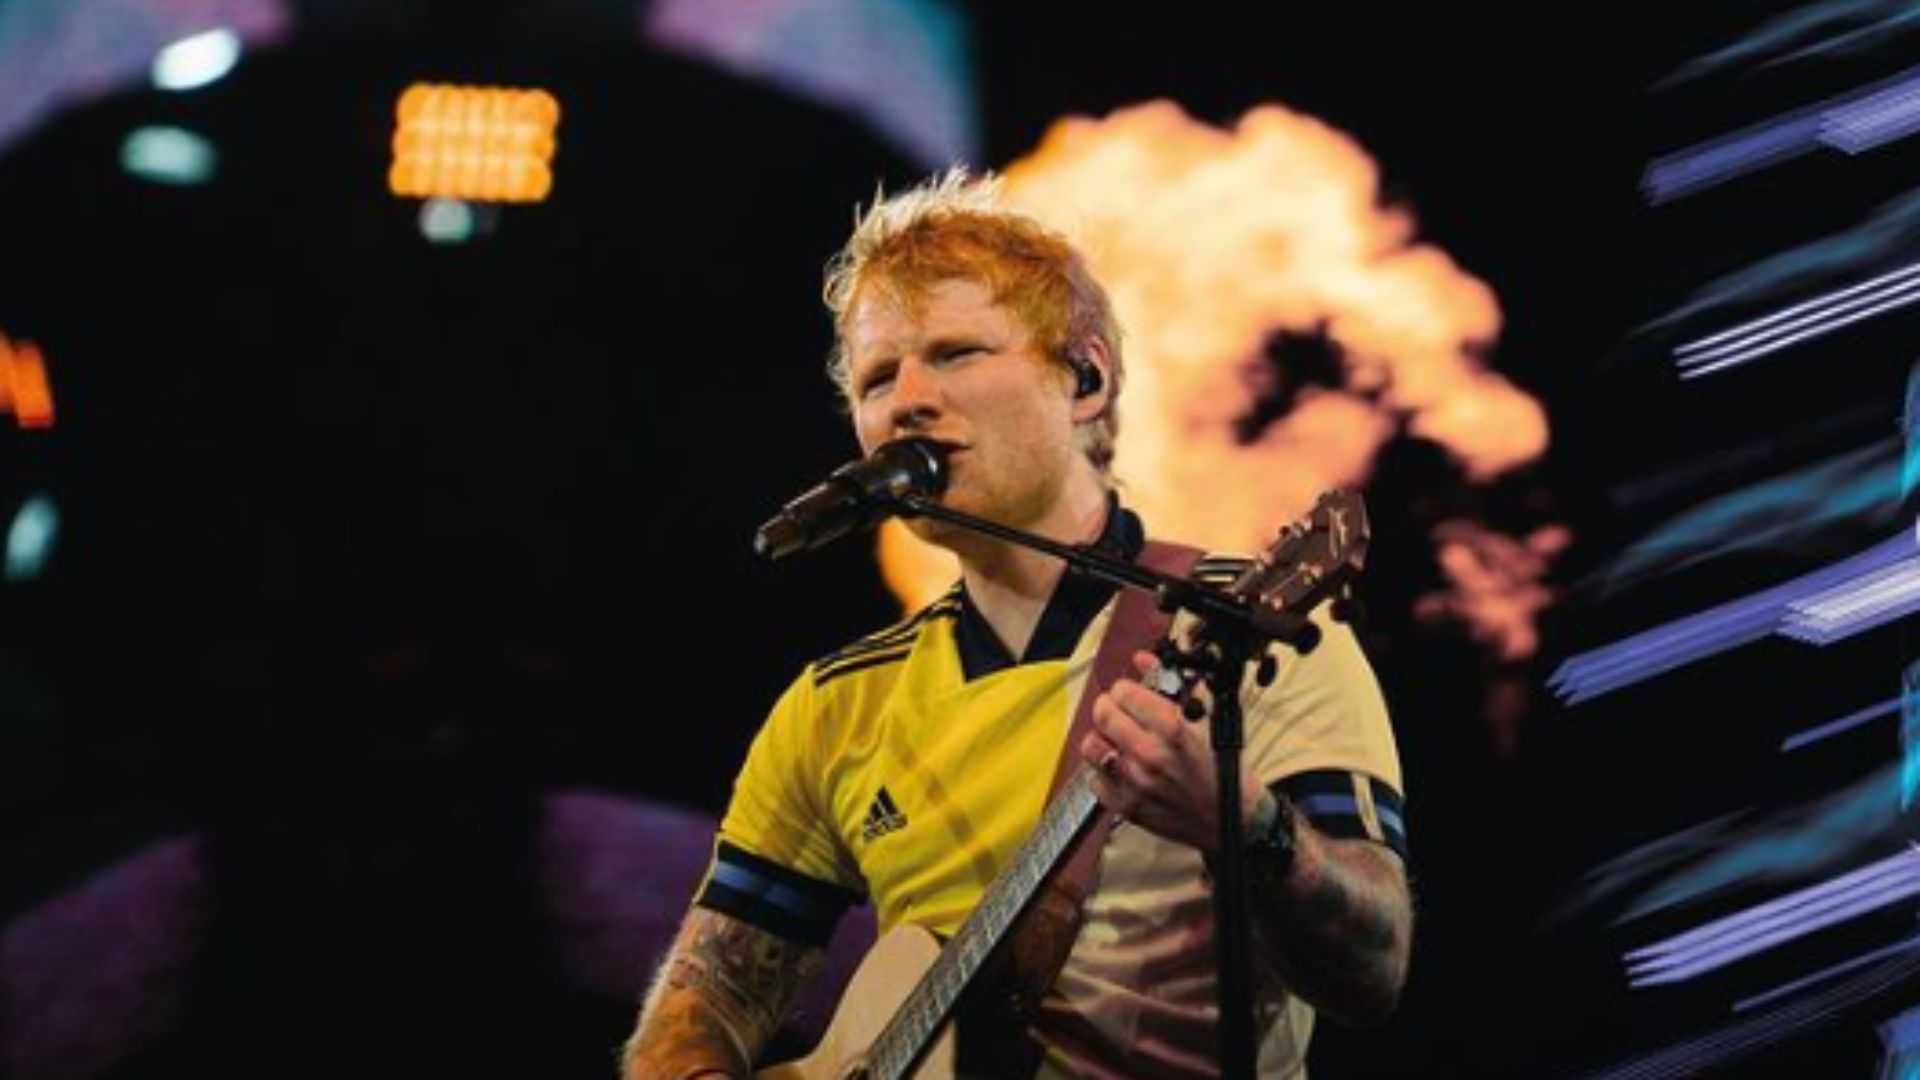 LOOK: Ticket prices for Ed Sheeran’s Mathematics Tour revealed